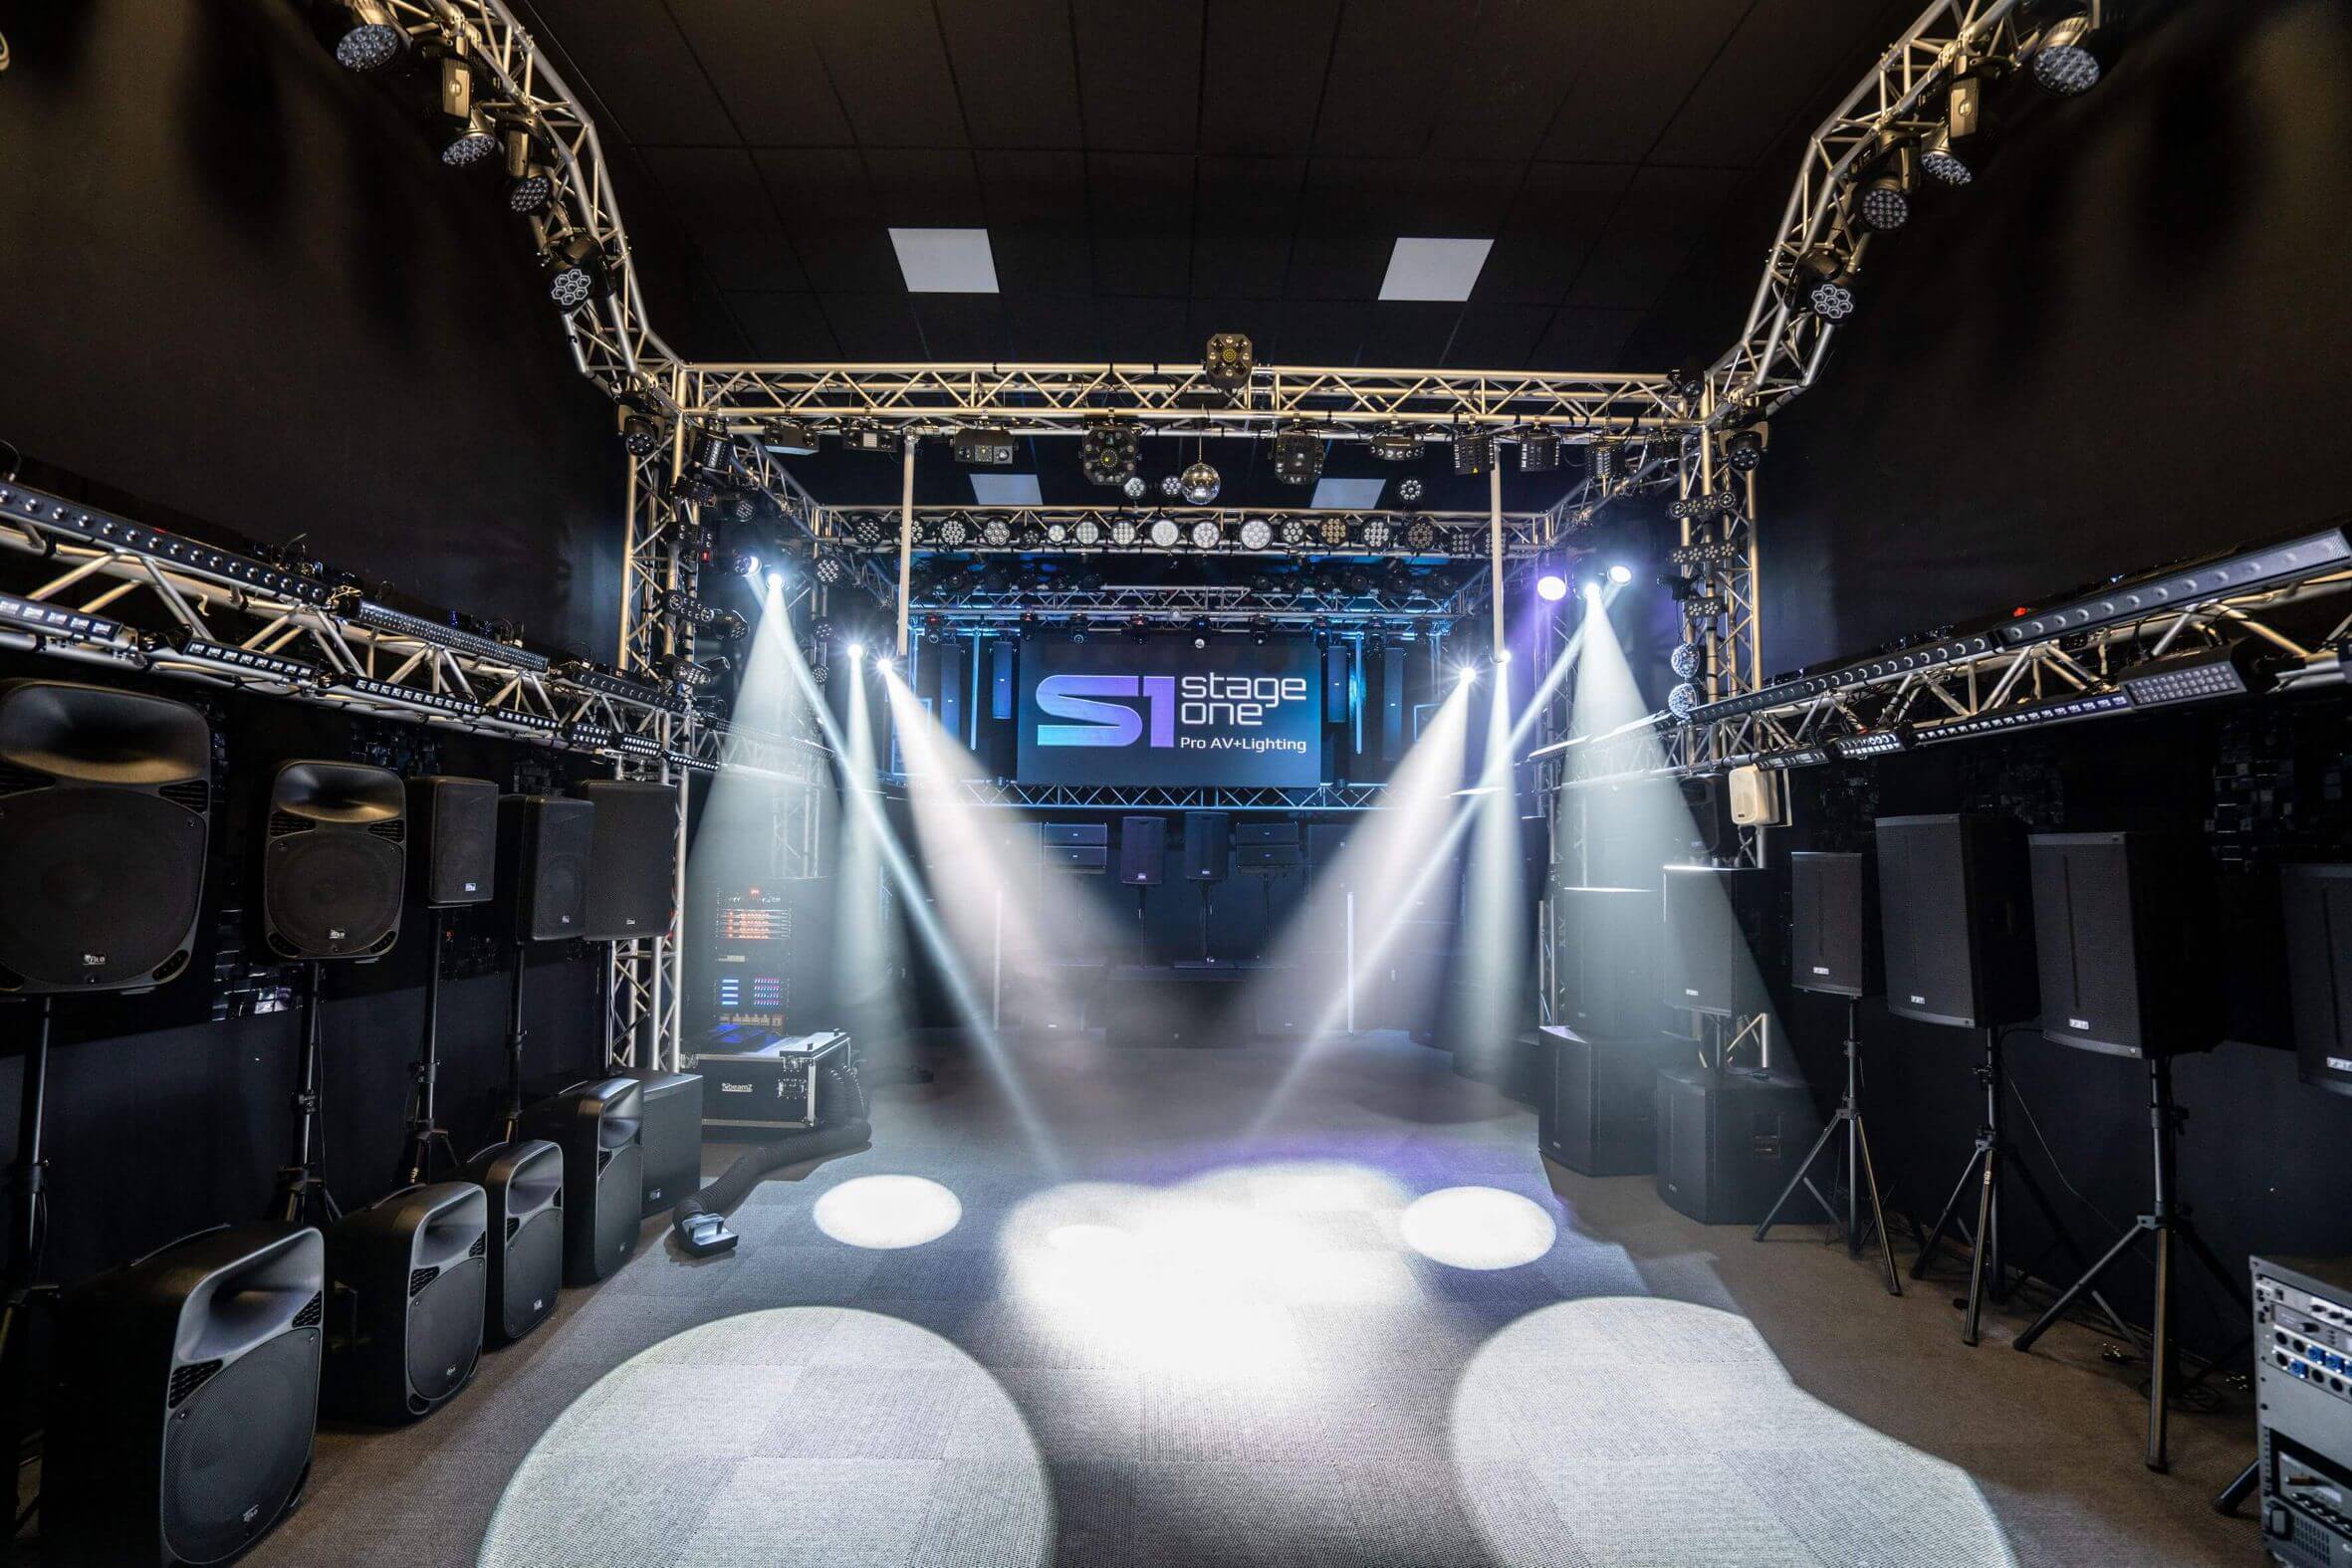 StageOne demo room - FBT, Alustage and beamZ Lighting